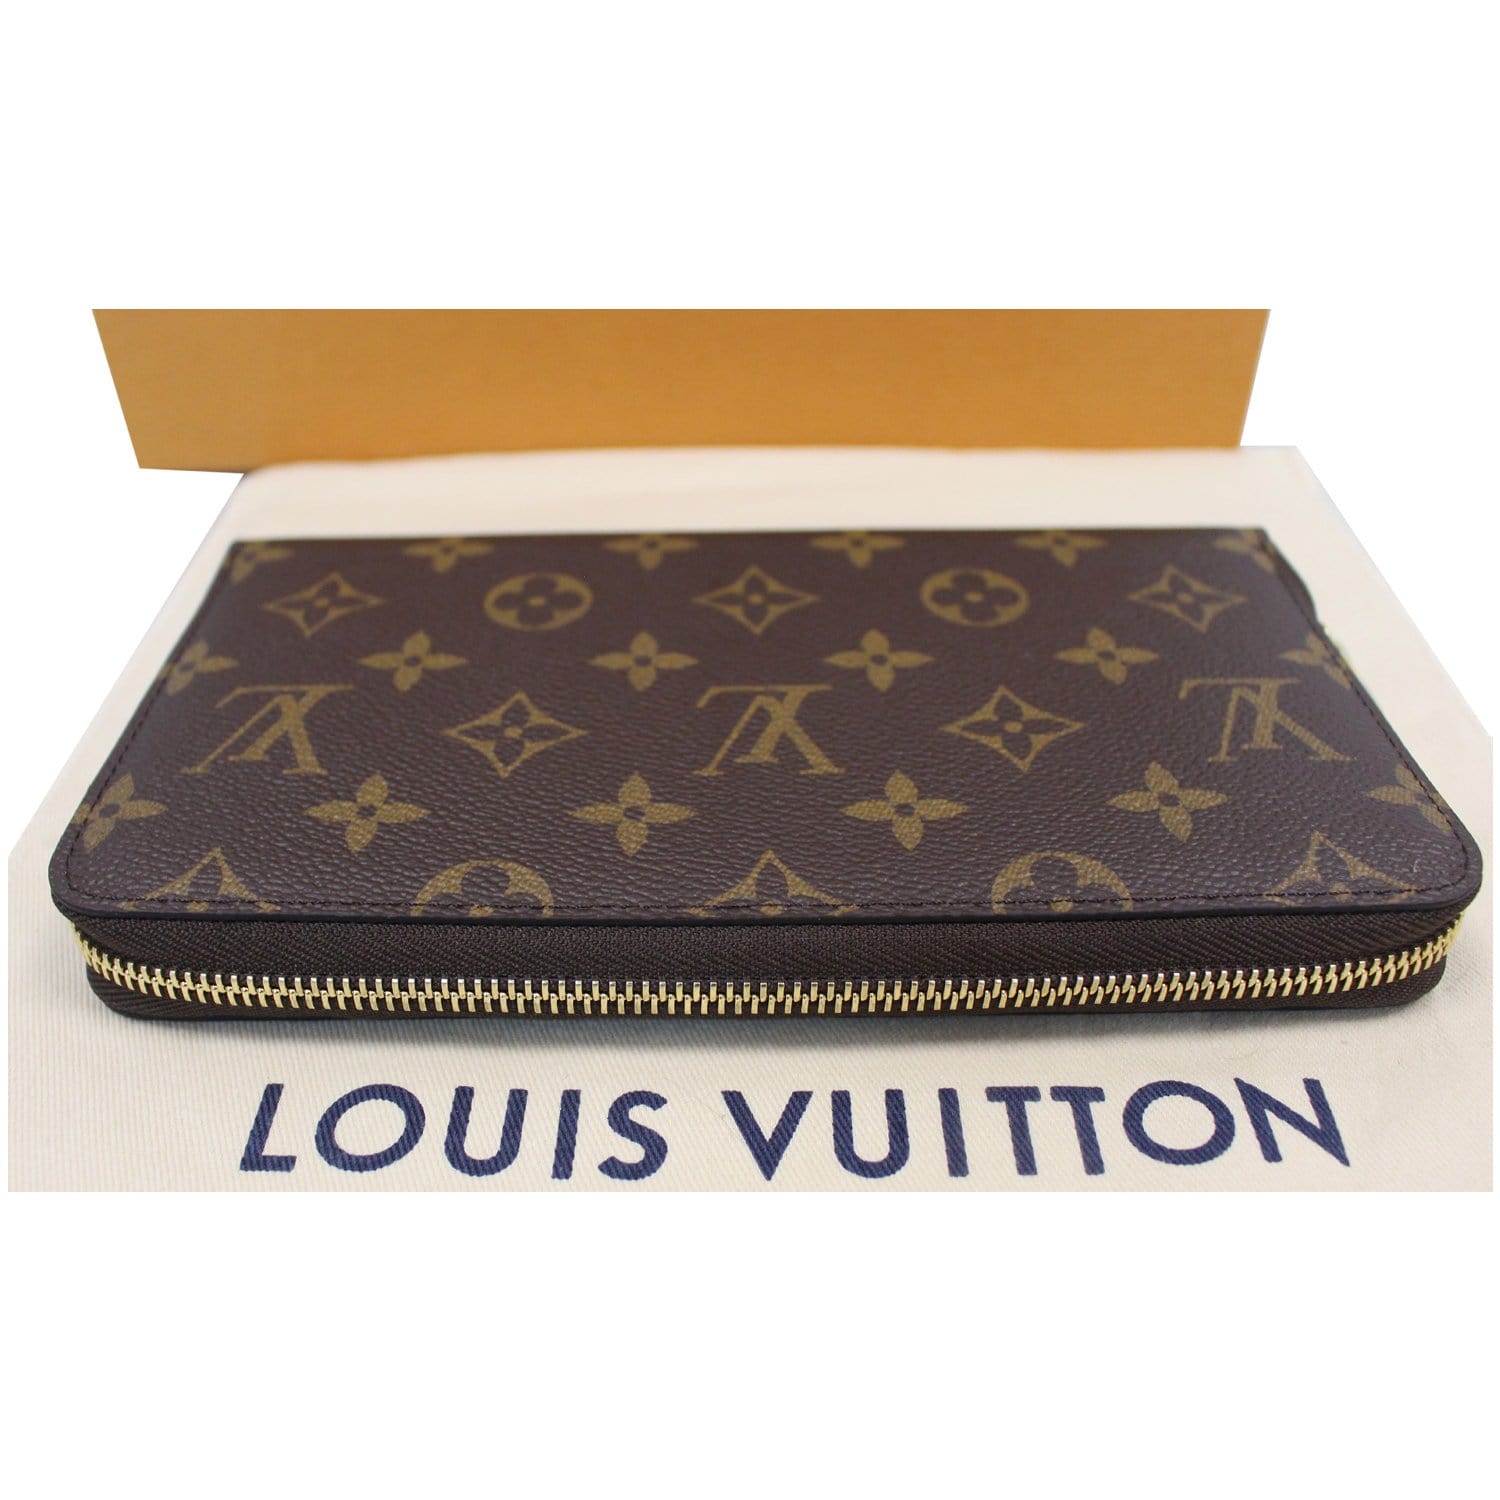 Authentic Louis Vuitton Classic Monogram Canvas Zippy with Brown Interior Wallet